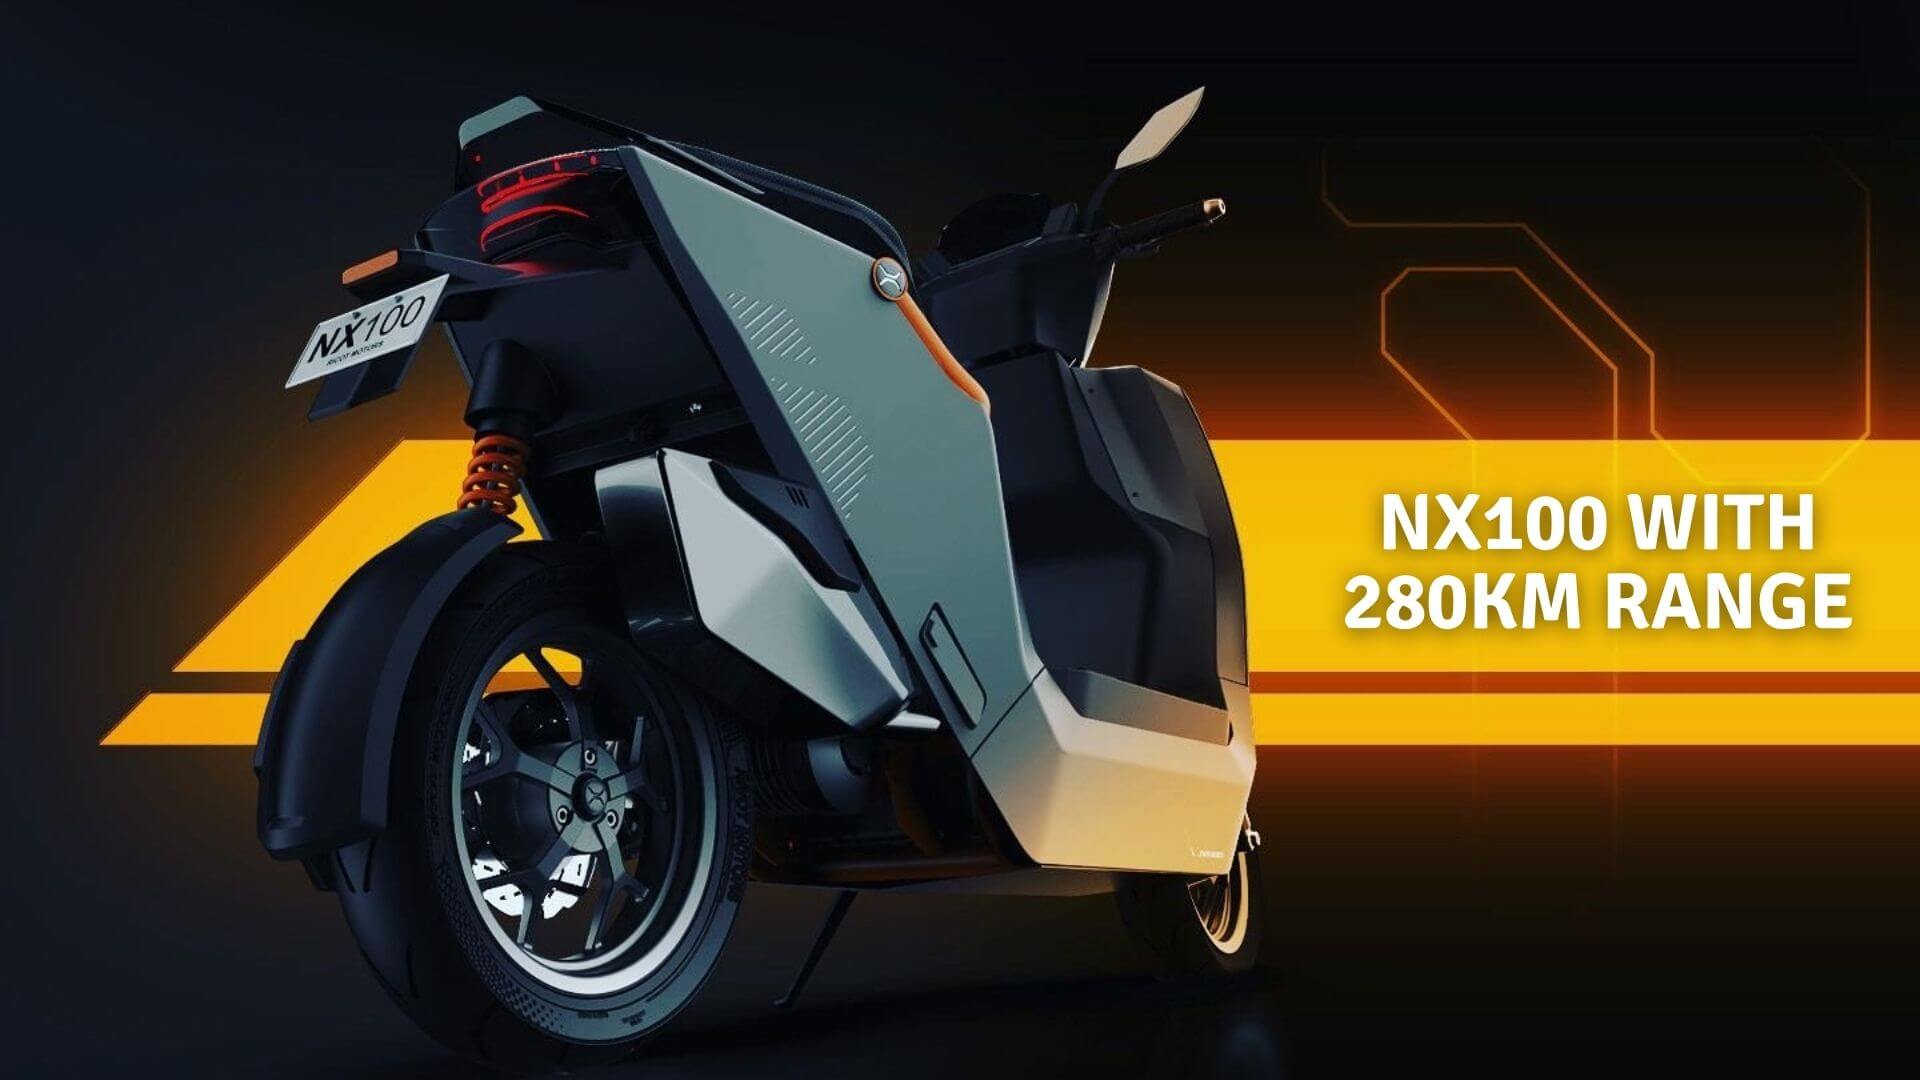 https://e-vehicleinfo.com/rivot-nx100-electric-scooter-comes-with-280km-range/